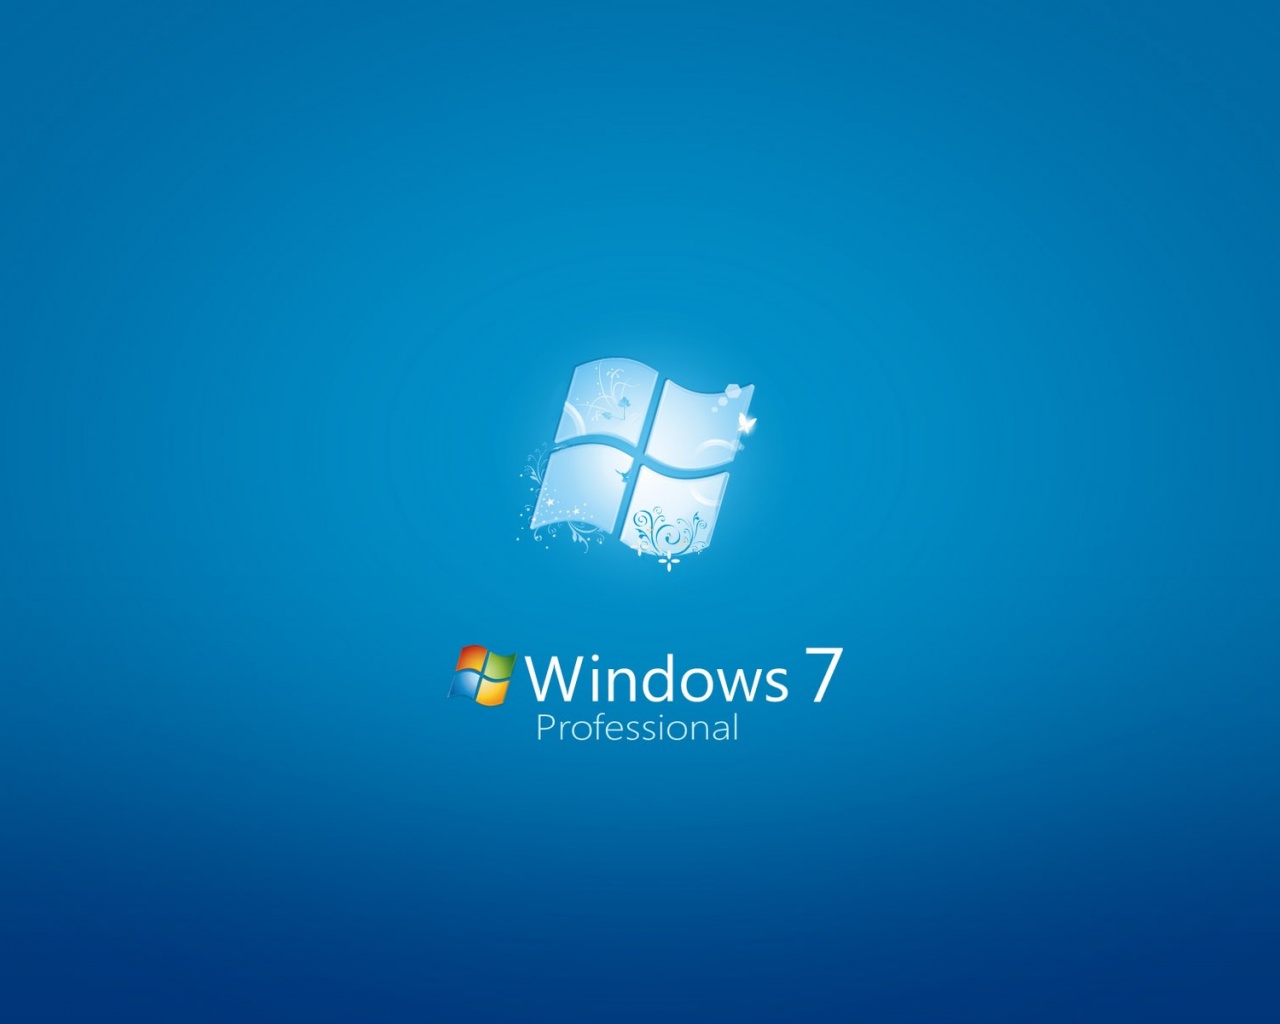 Microsoft Windows Xp Professional